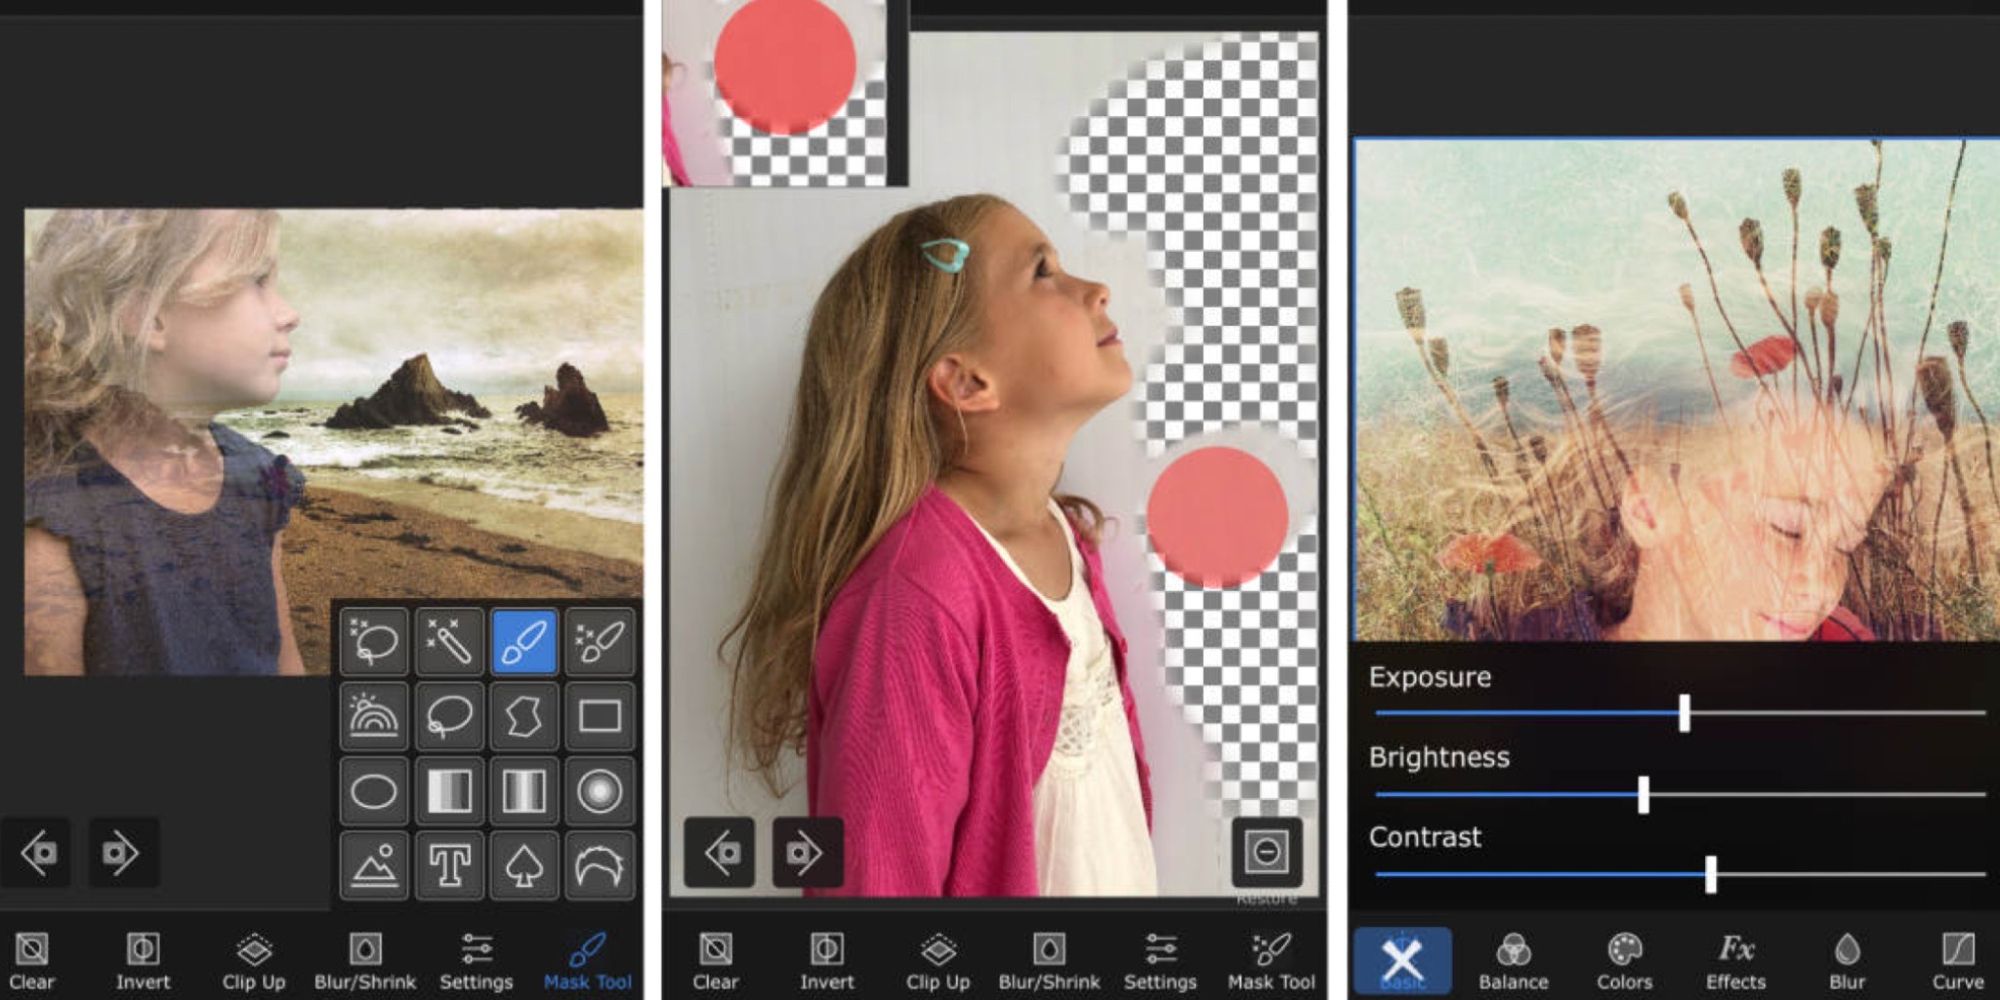 Screenshots of the mobile photo editing app Superimpose.